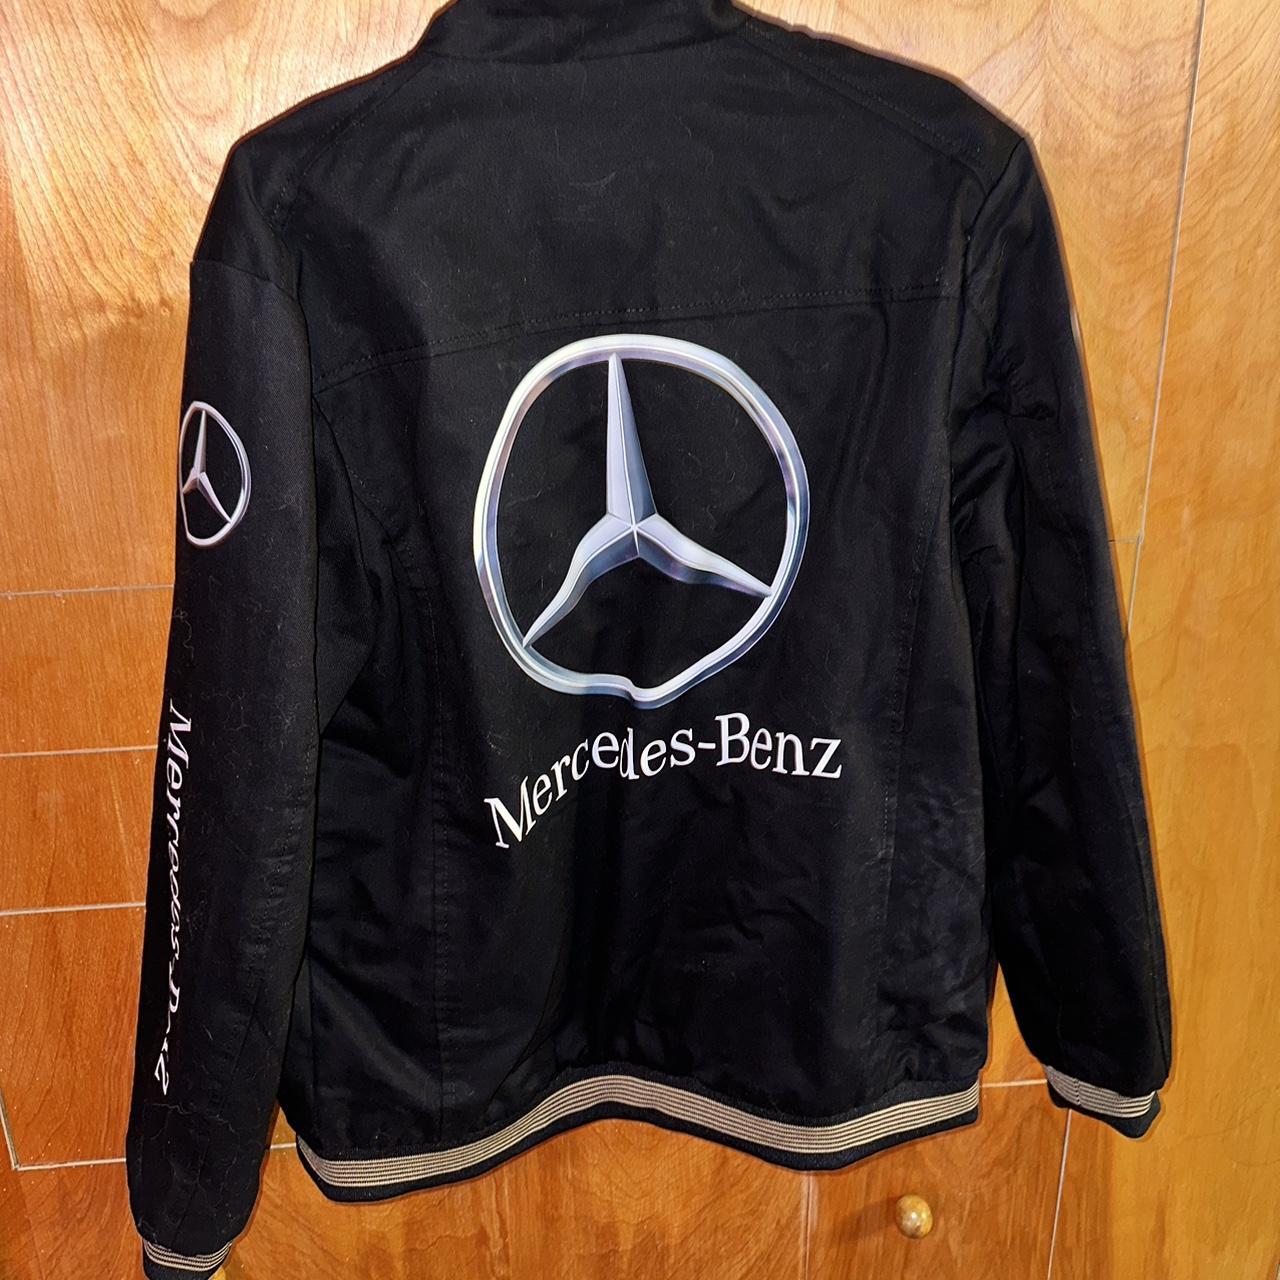 Mercedes Benz Jacket!, The Logo blasted everywhere